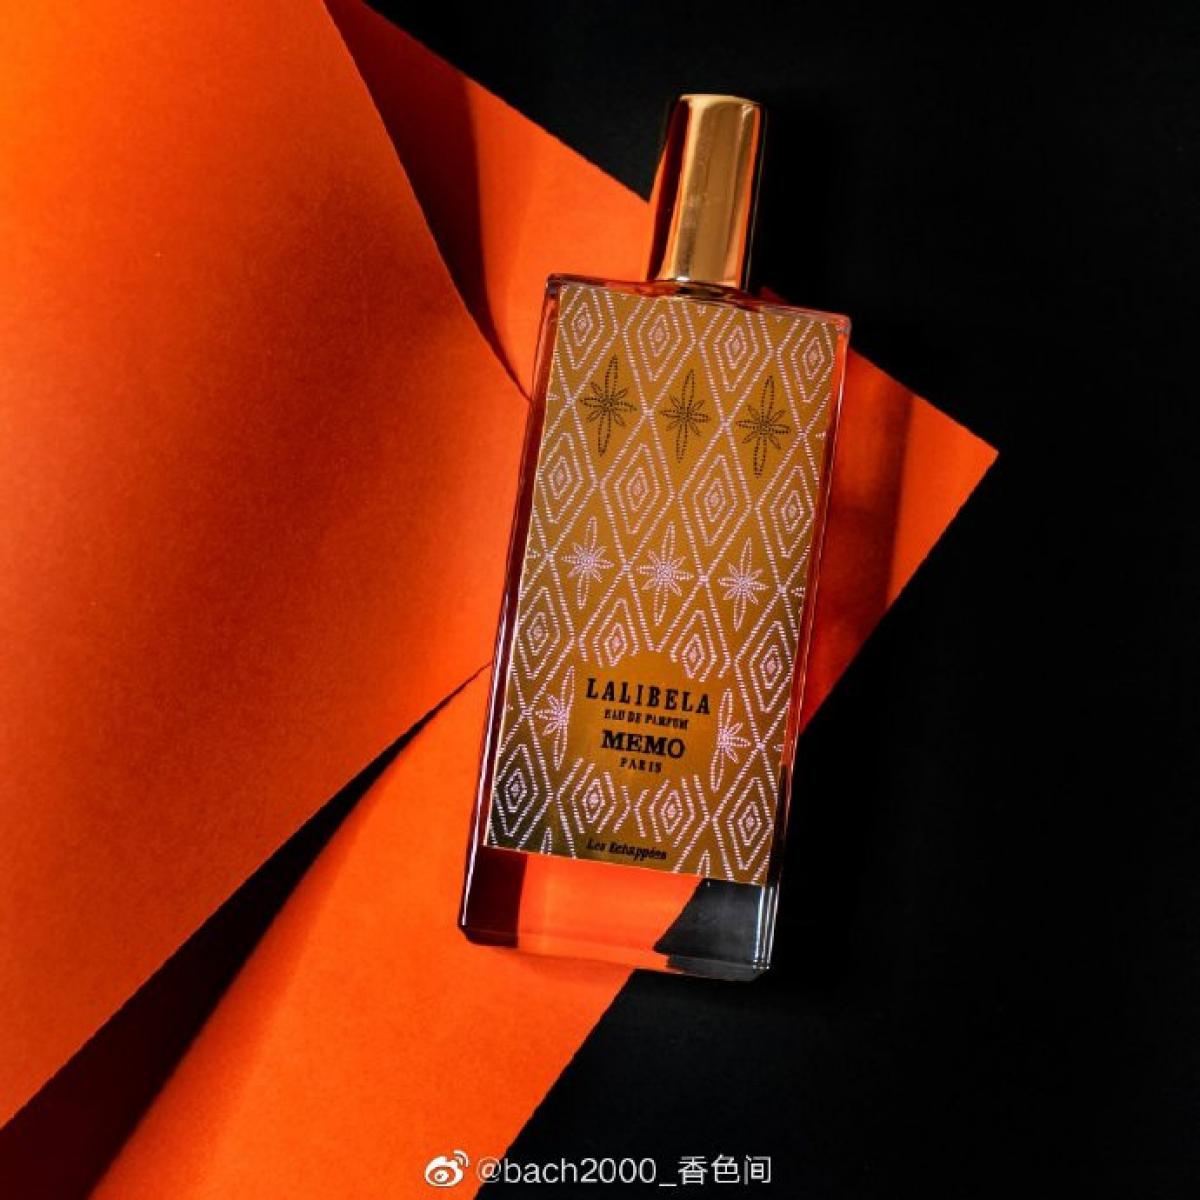 Lalibela Memo Paris perfume - a fragrance for women 2007